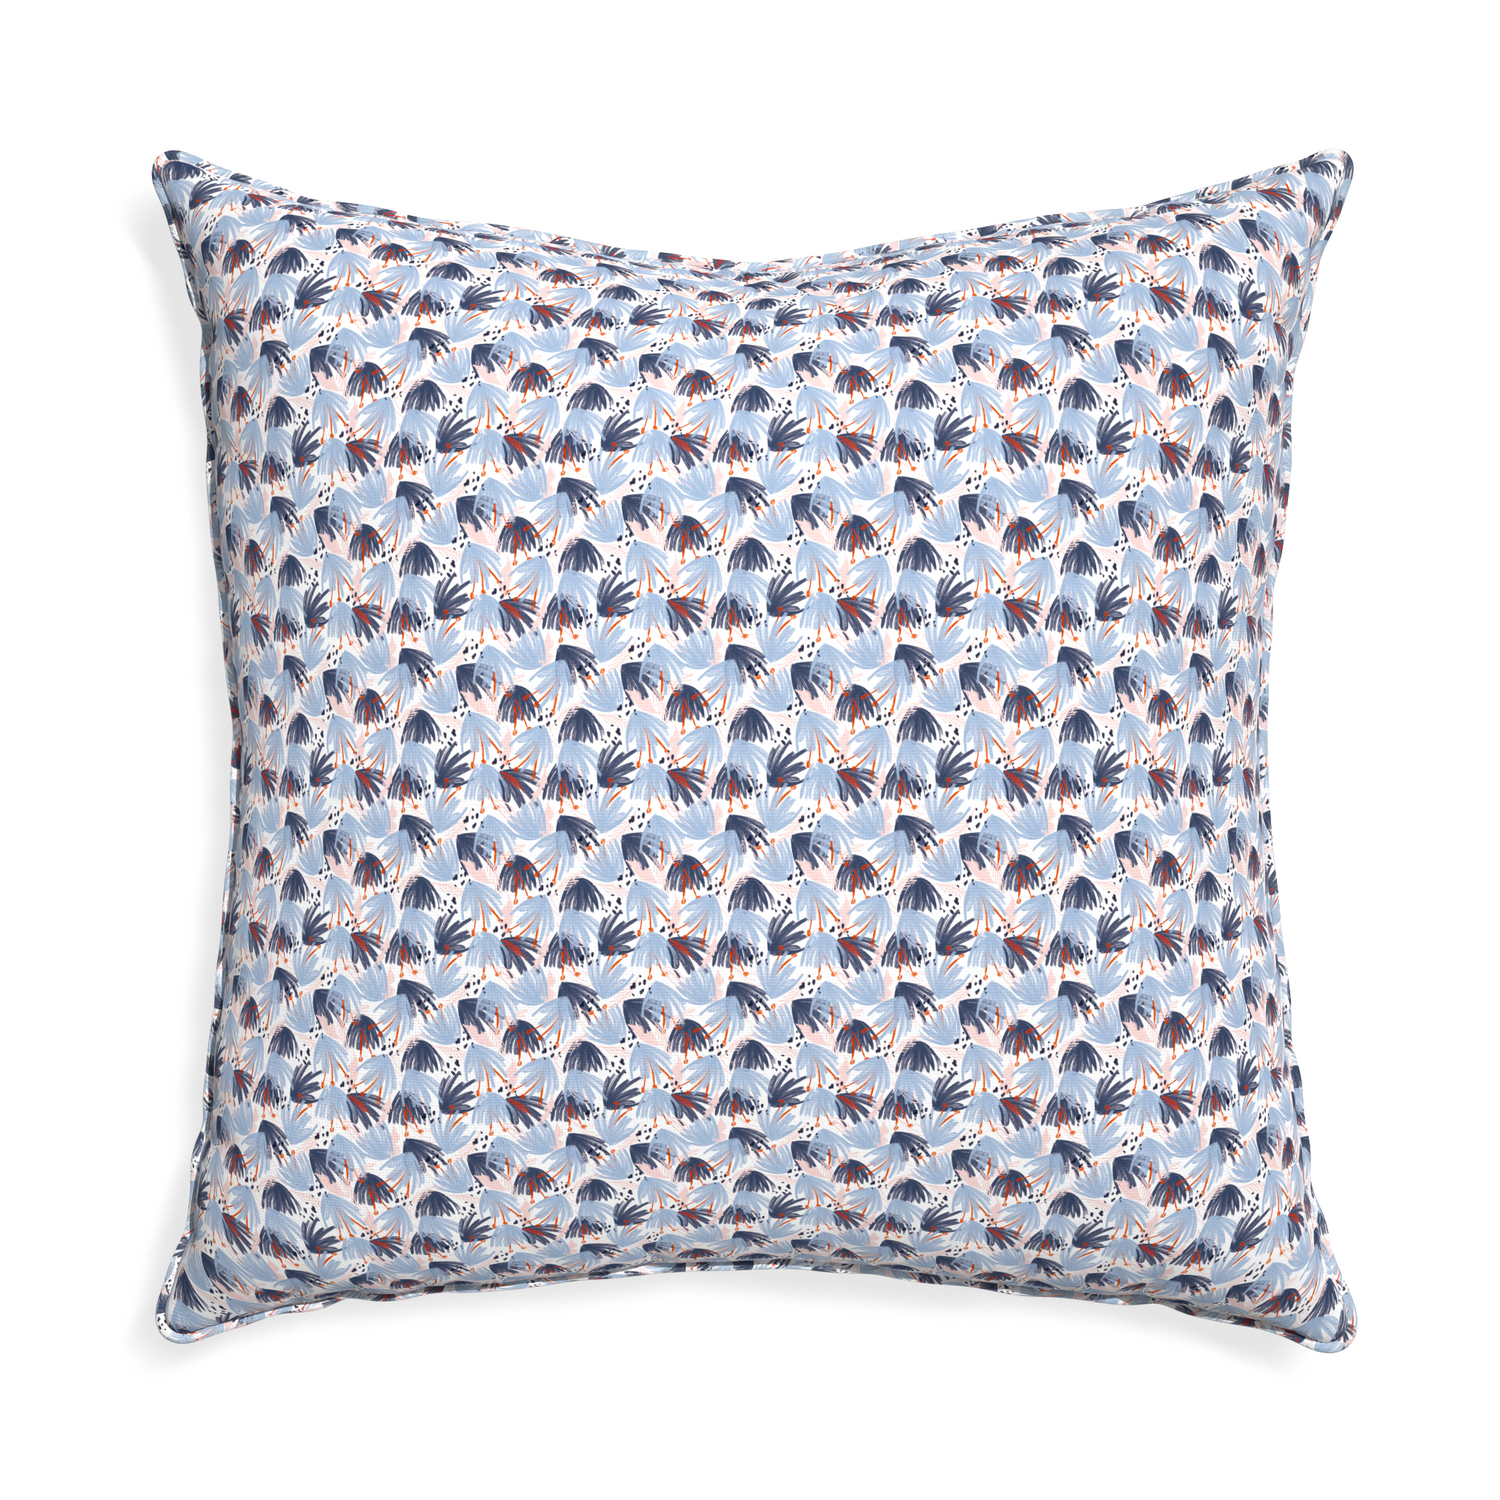 Euro-sham eden blue custom pillow with e piping on white background